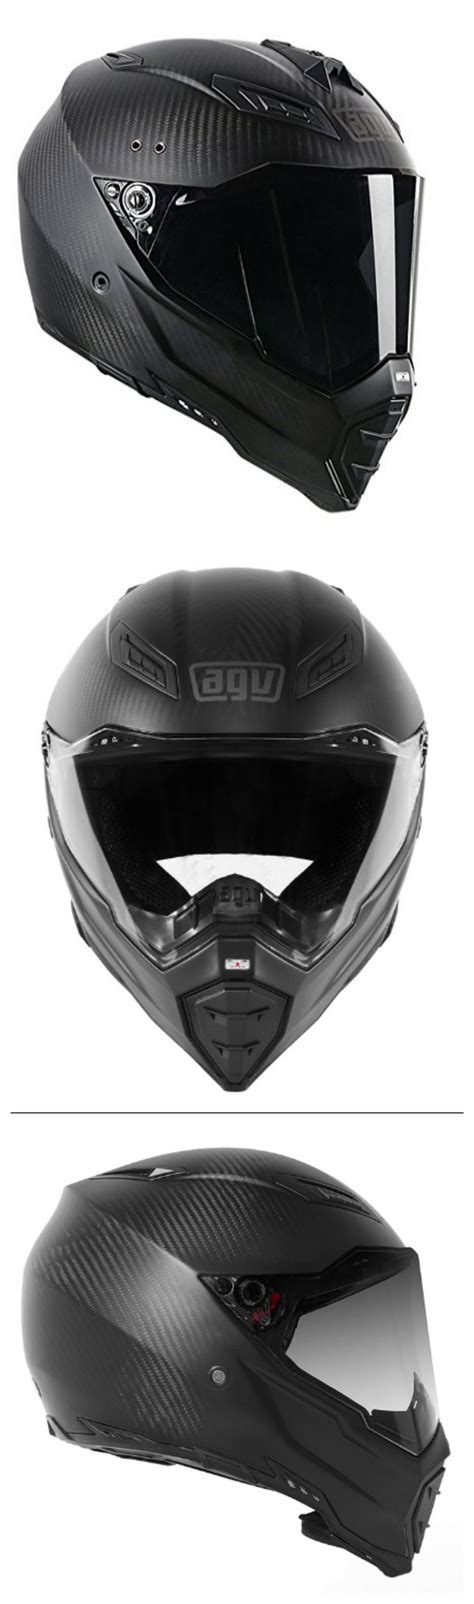 Carbon Fiber Motorcycle Helmet Carbon Fiber Helmets Motorcycle Helmet Design Custom